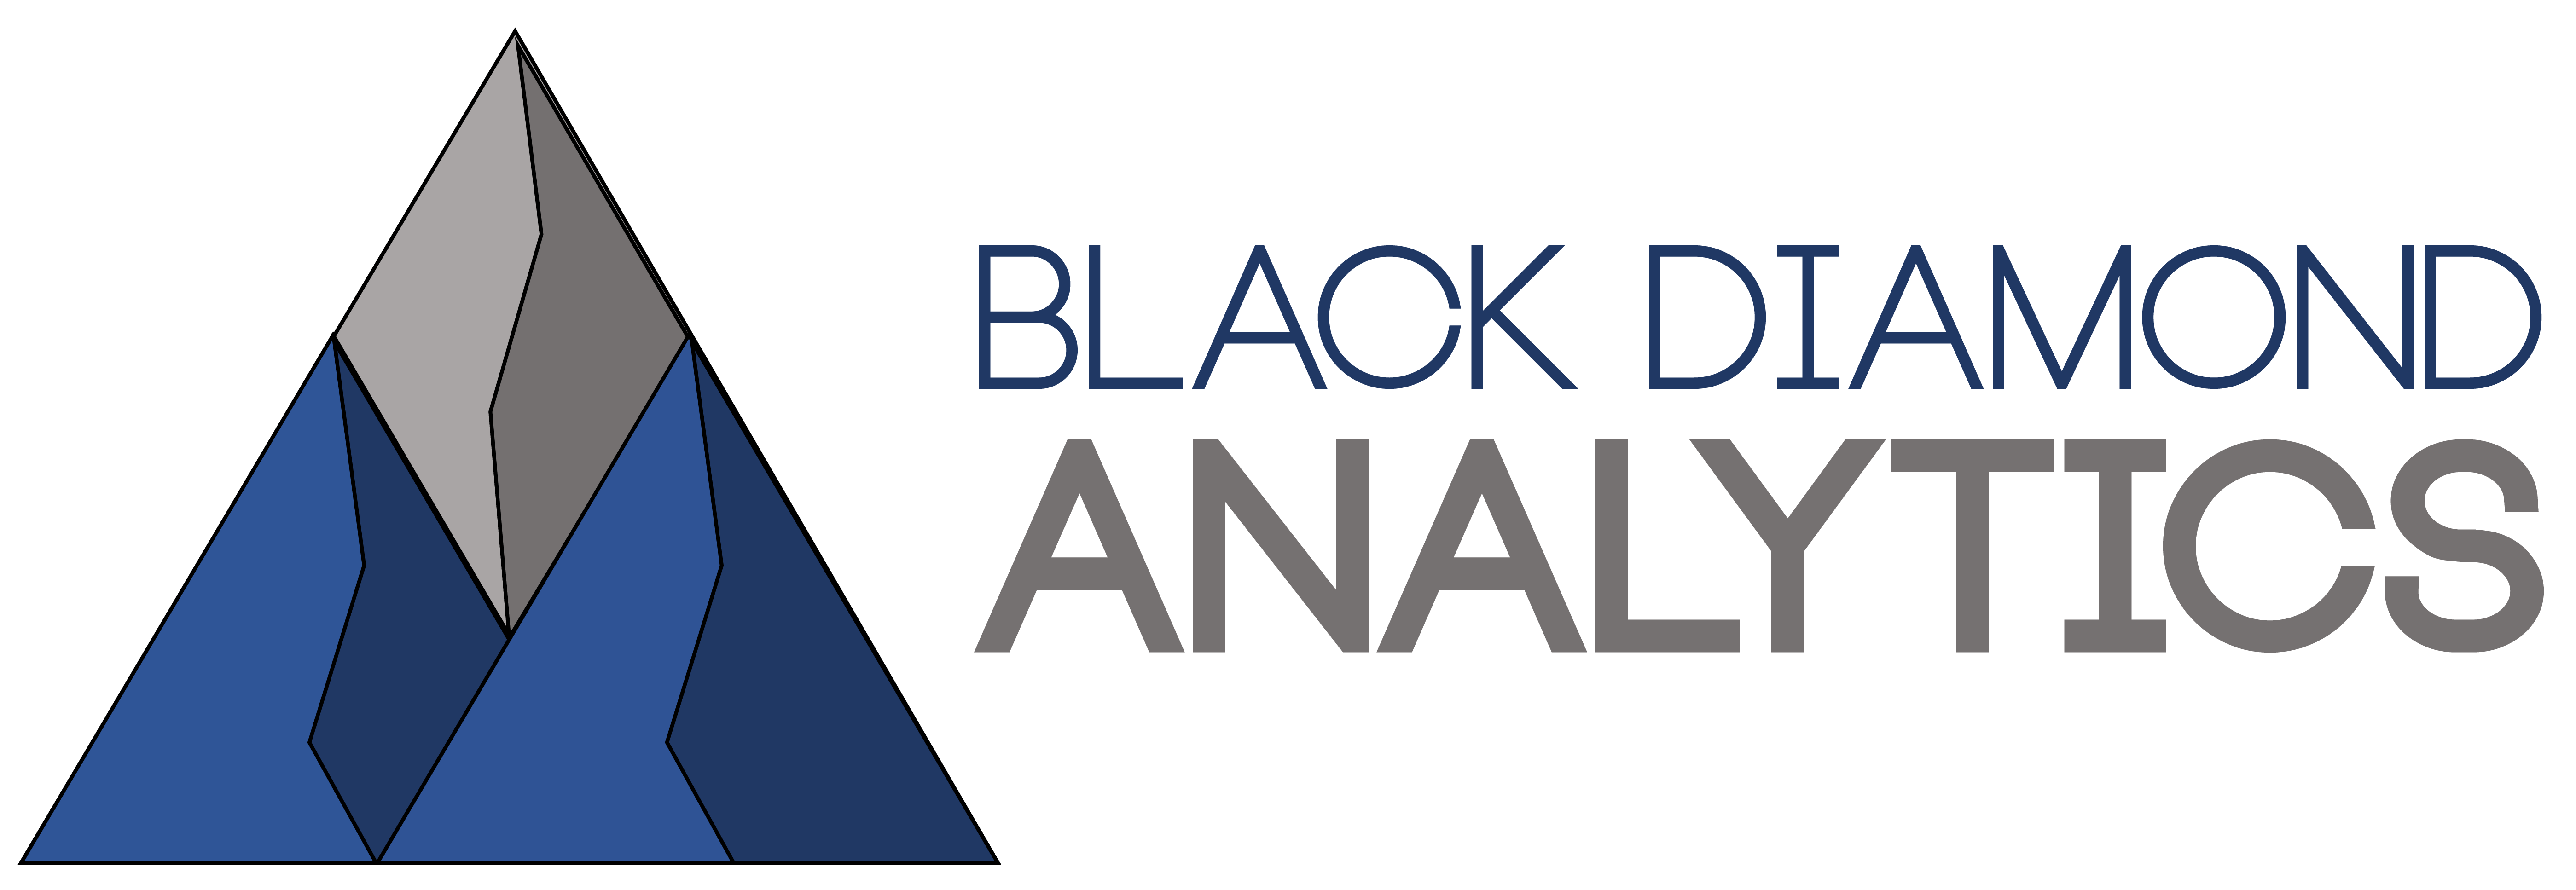 Black Diamond Analytics